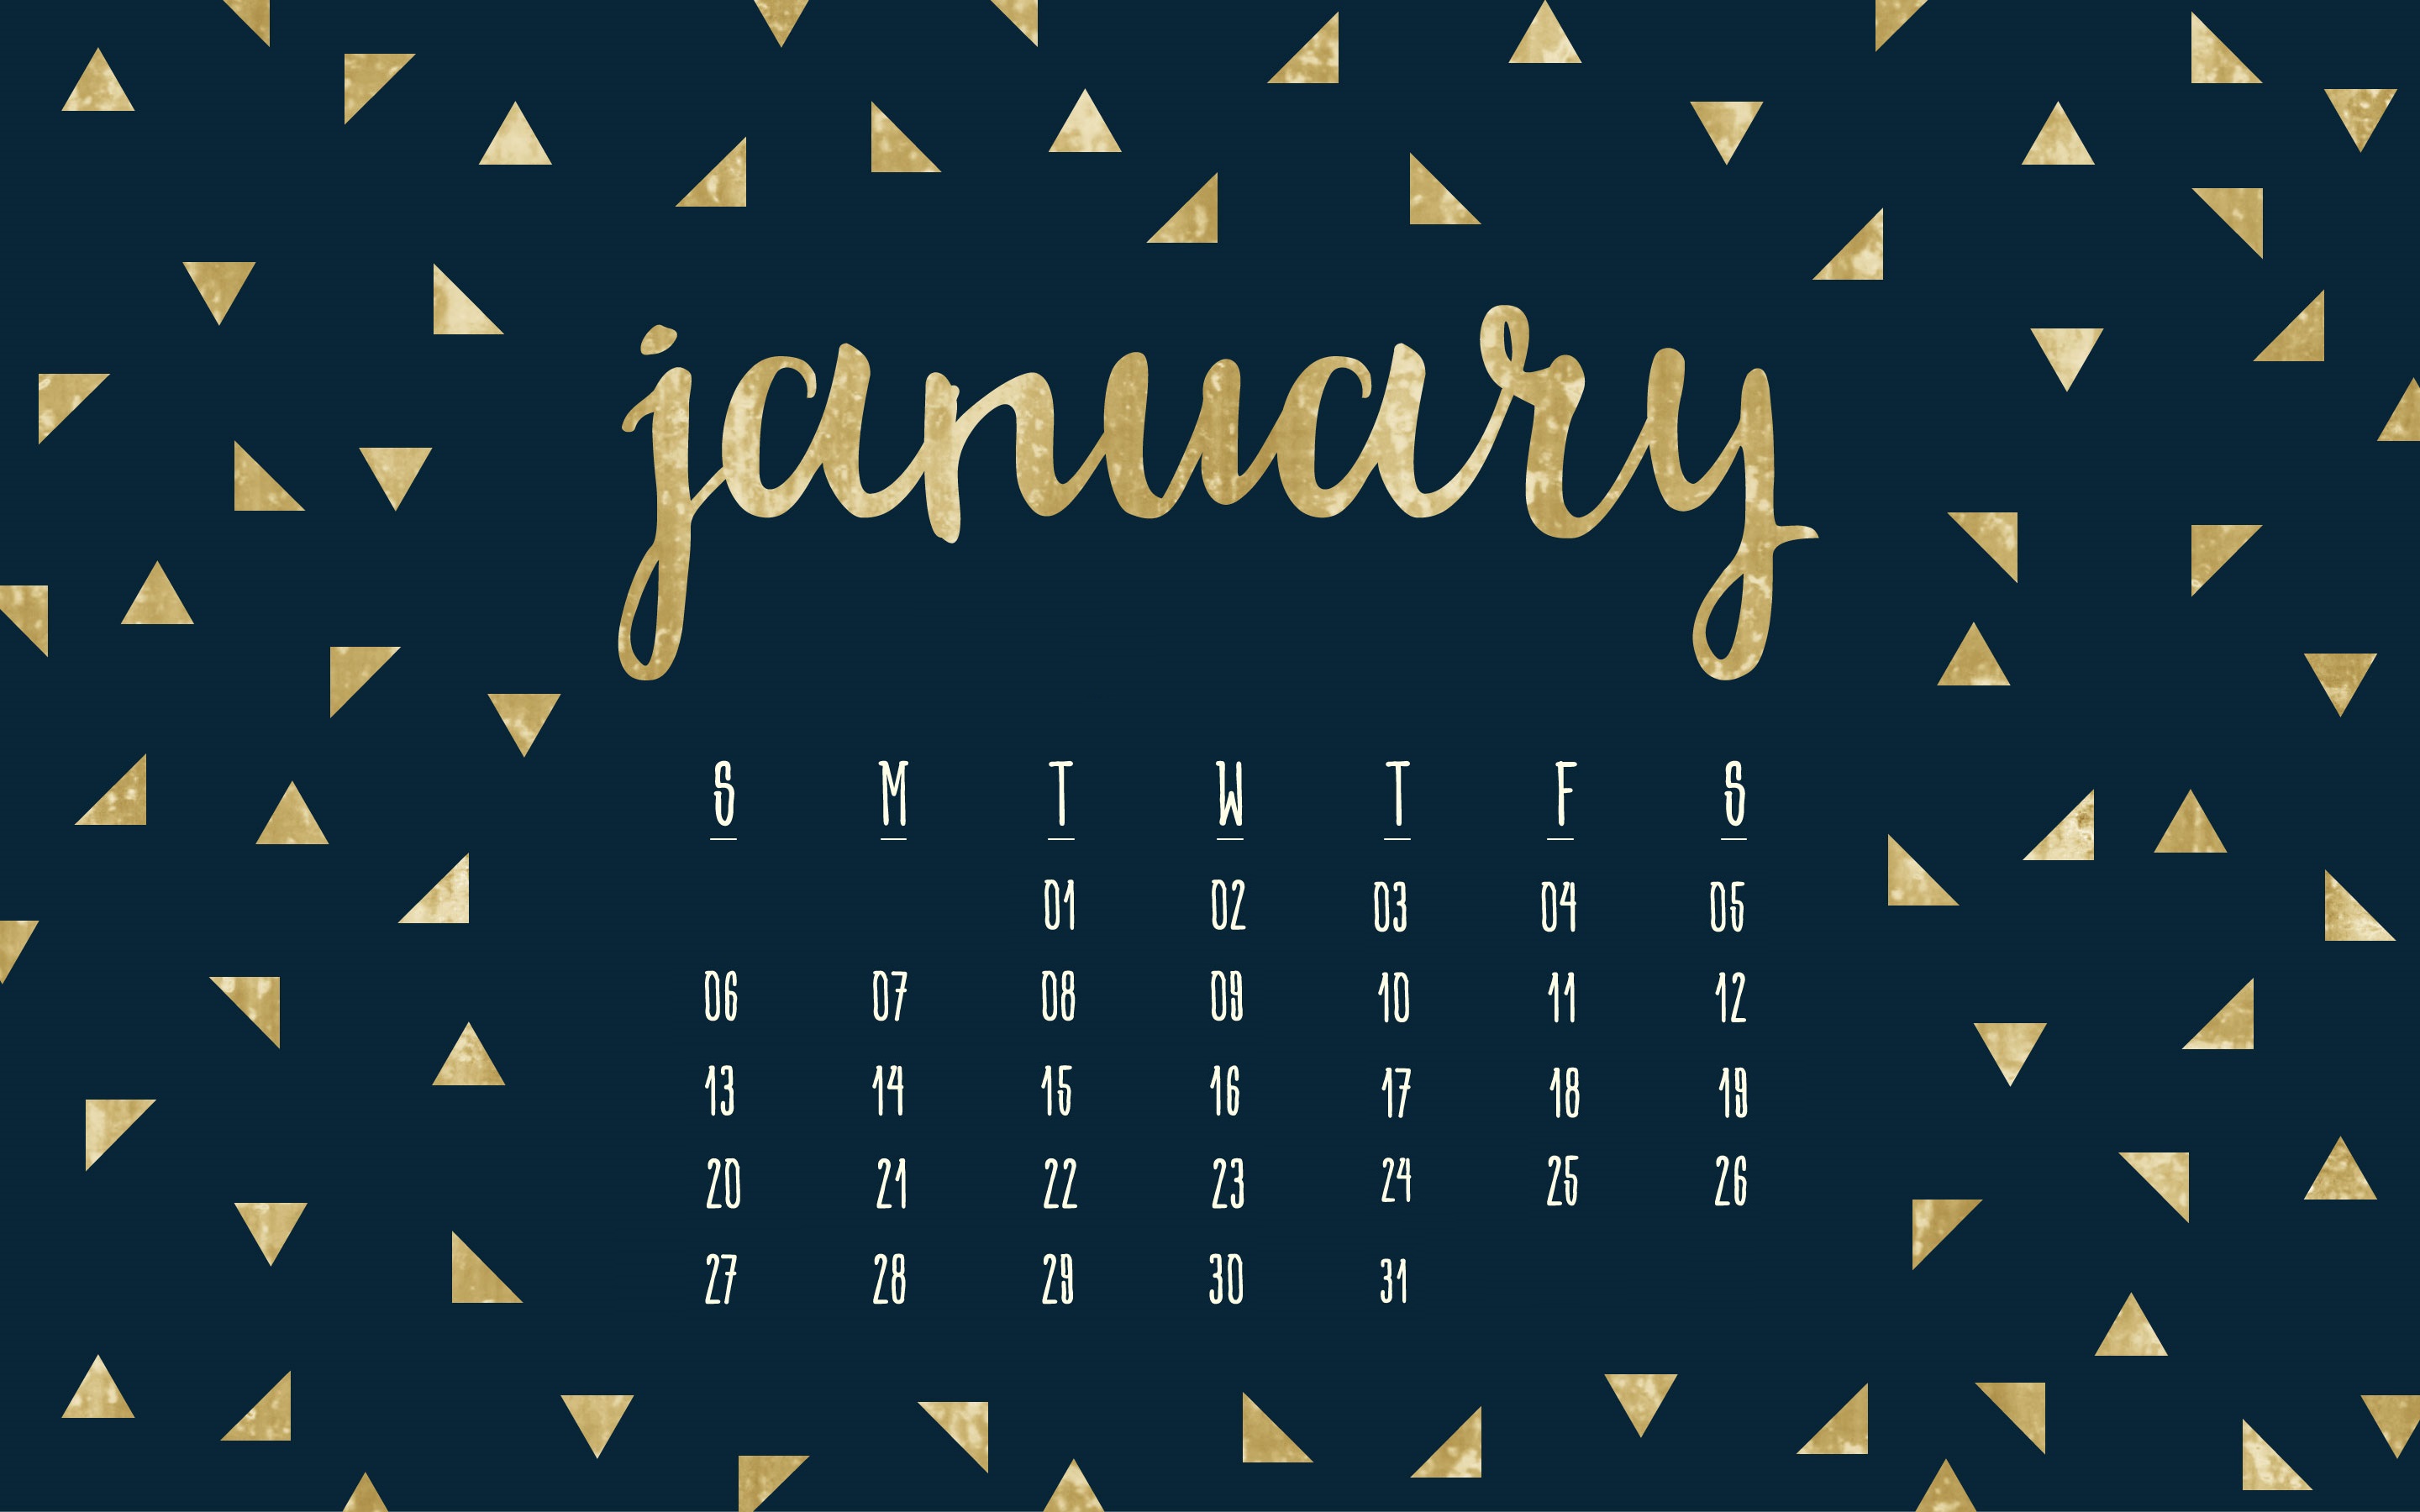 January 2019 HD Calendar Wallpapers Latest Calendar 2880x1800